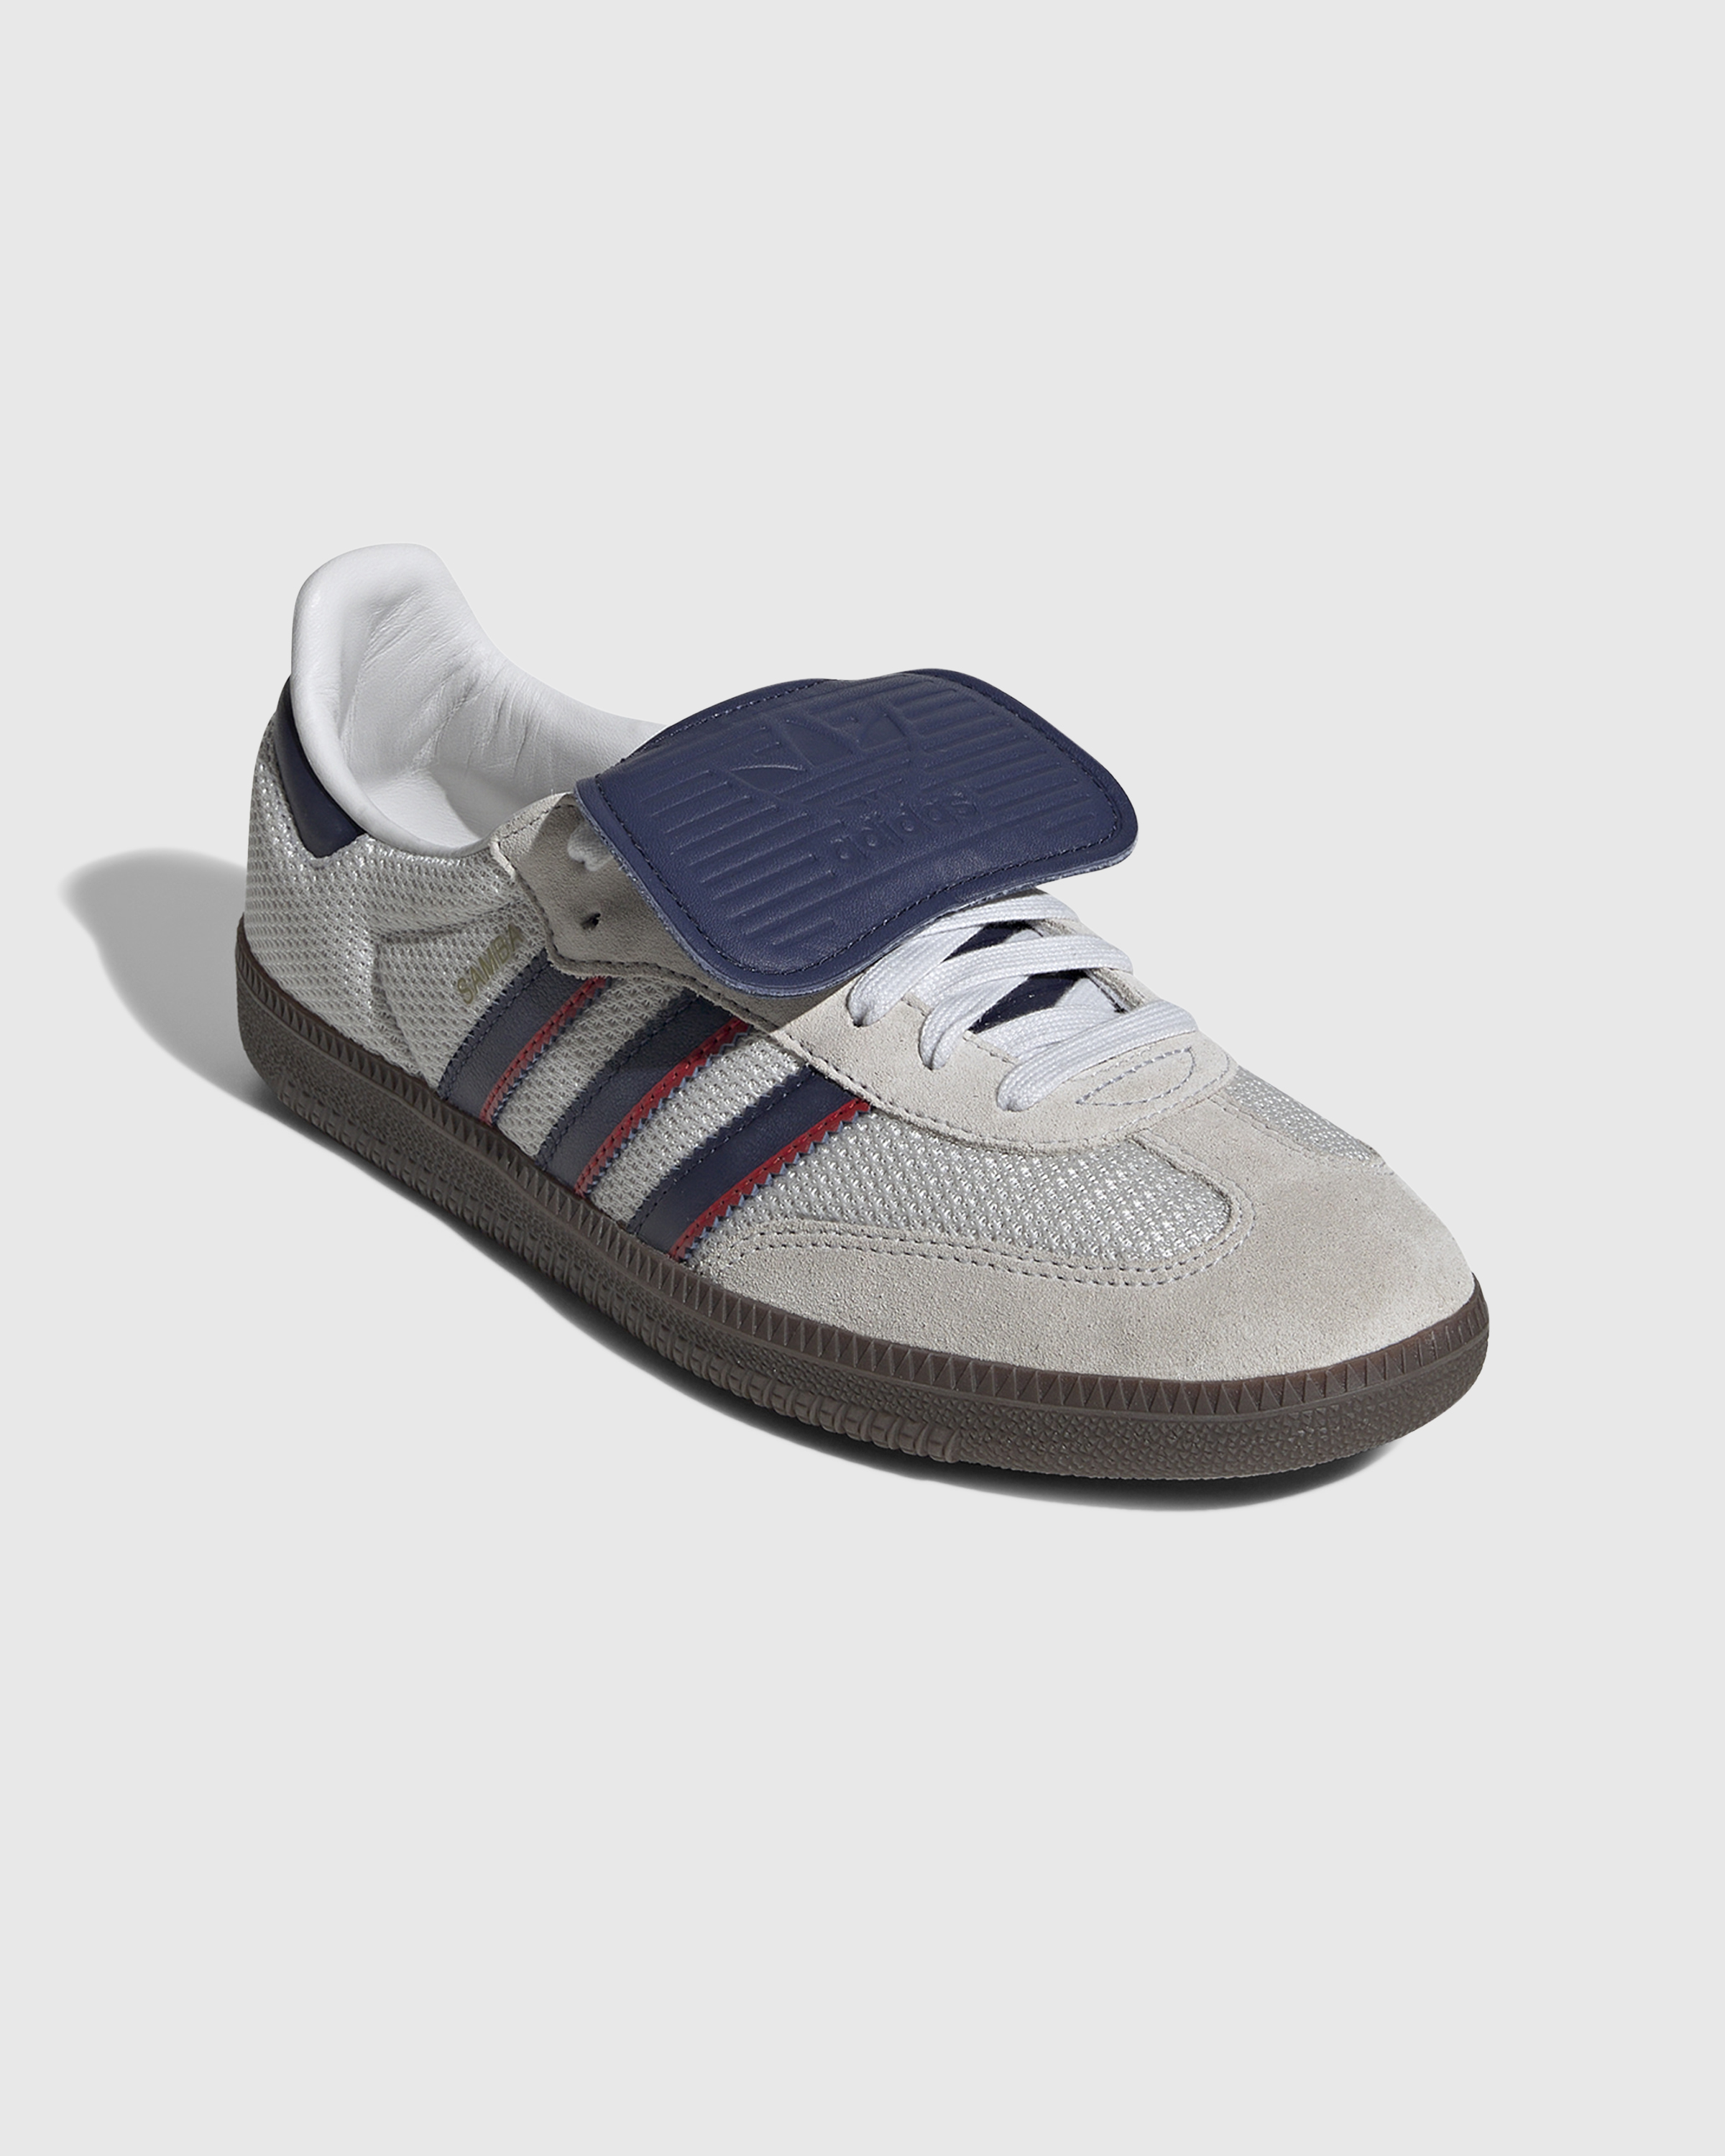 Adidas – Samba LT White/Blue/Gum - Low Top Sneakers - White - Image 3